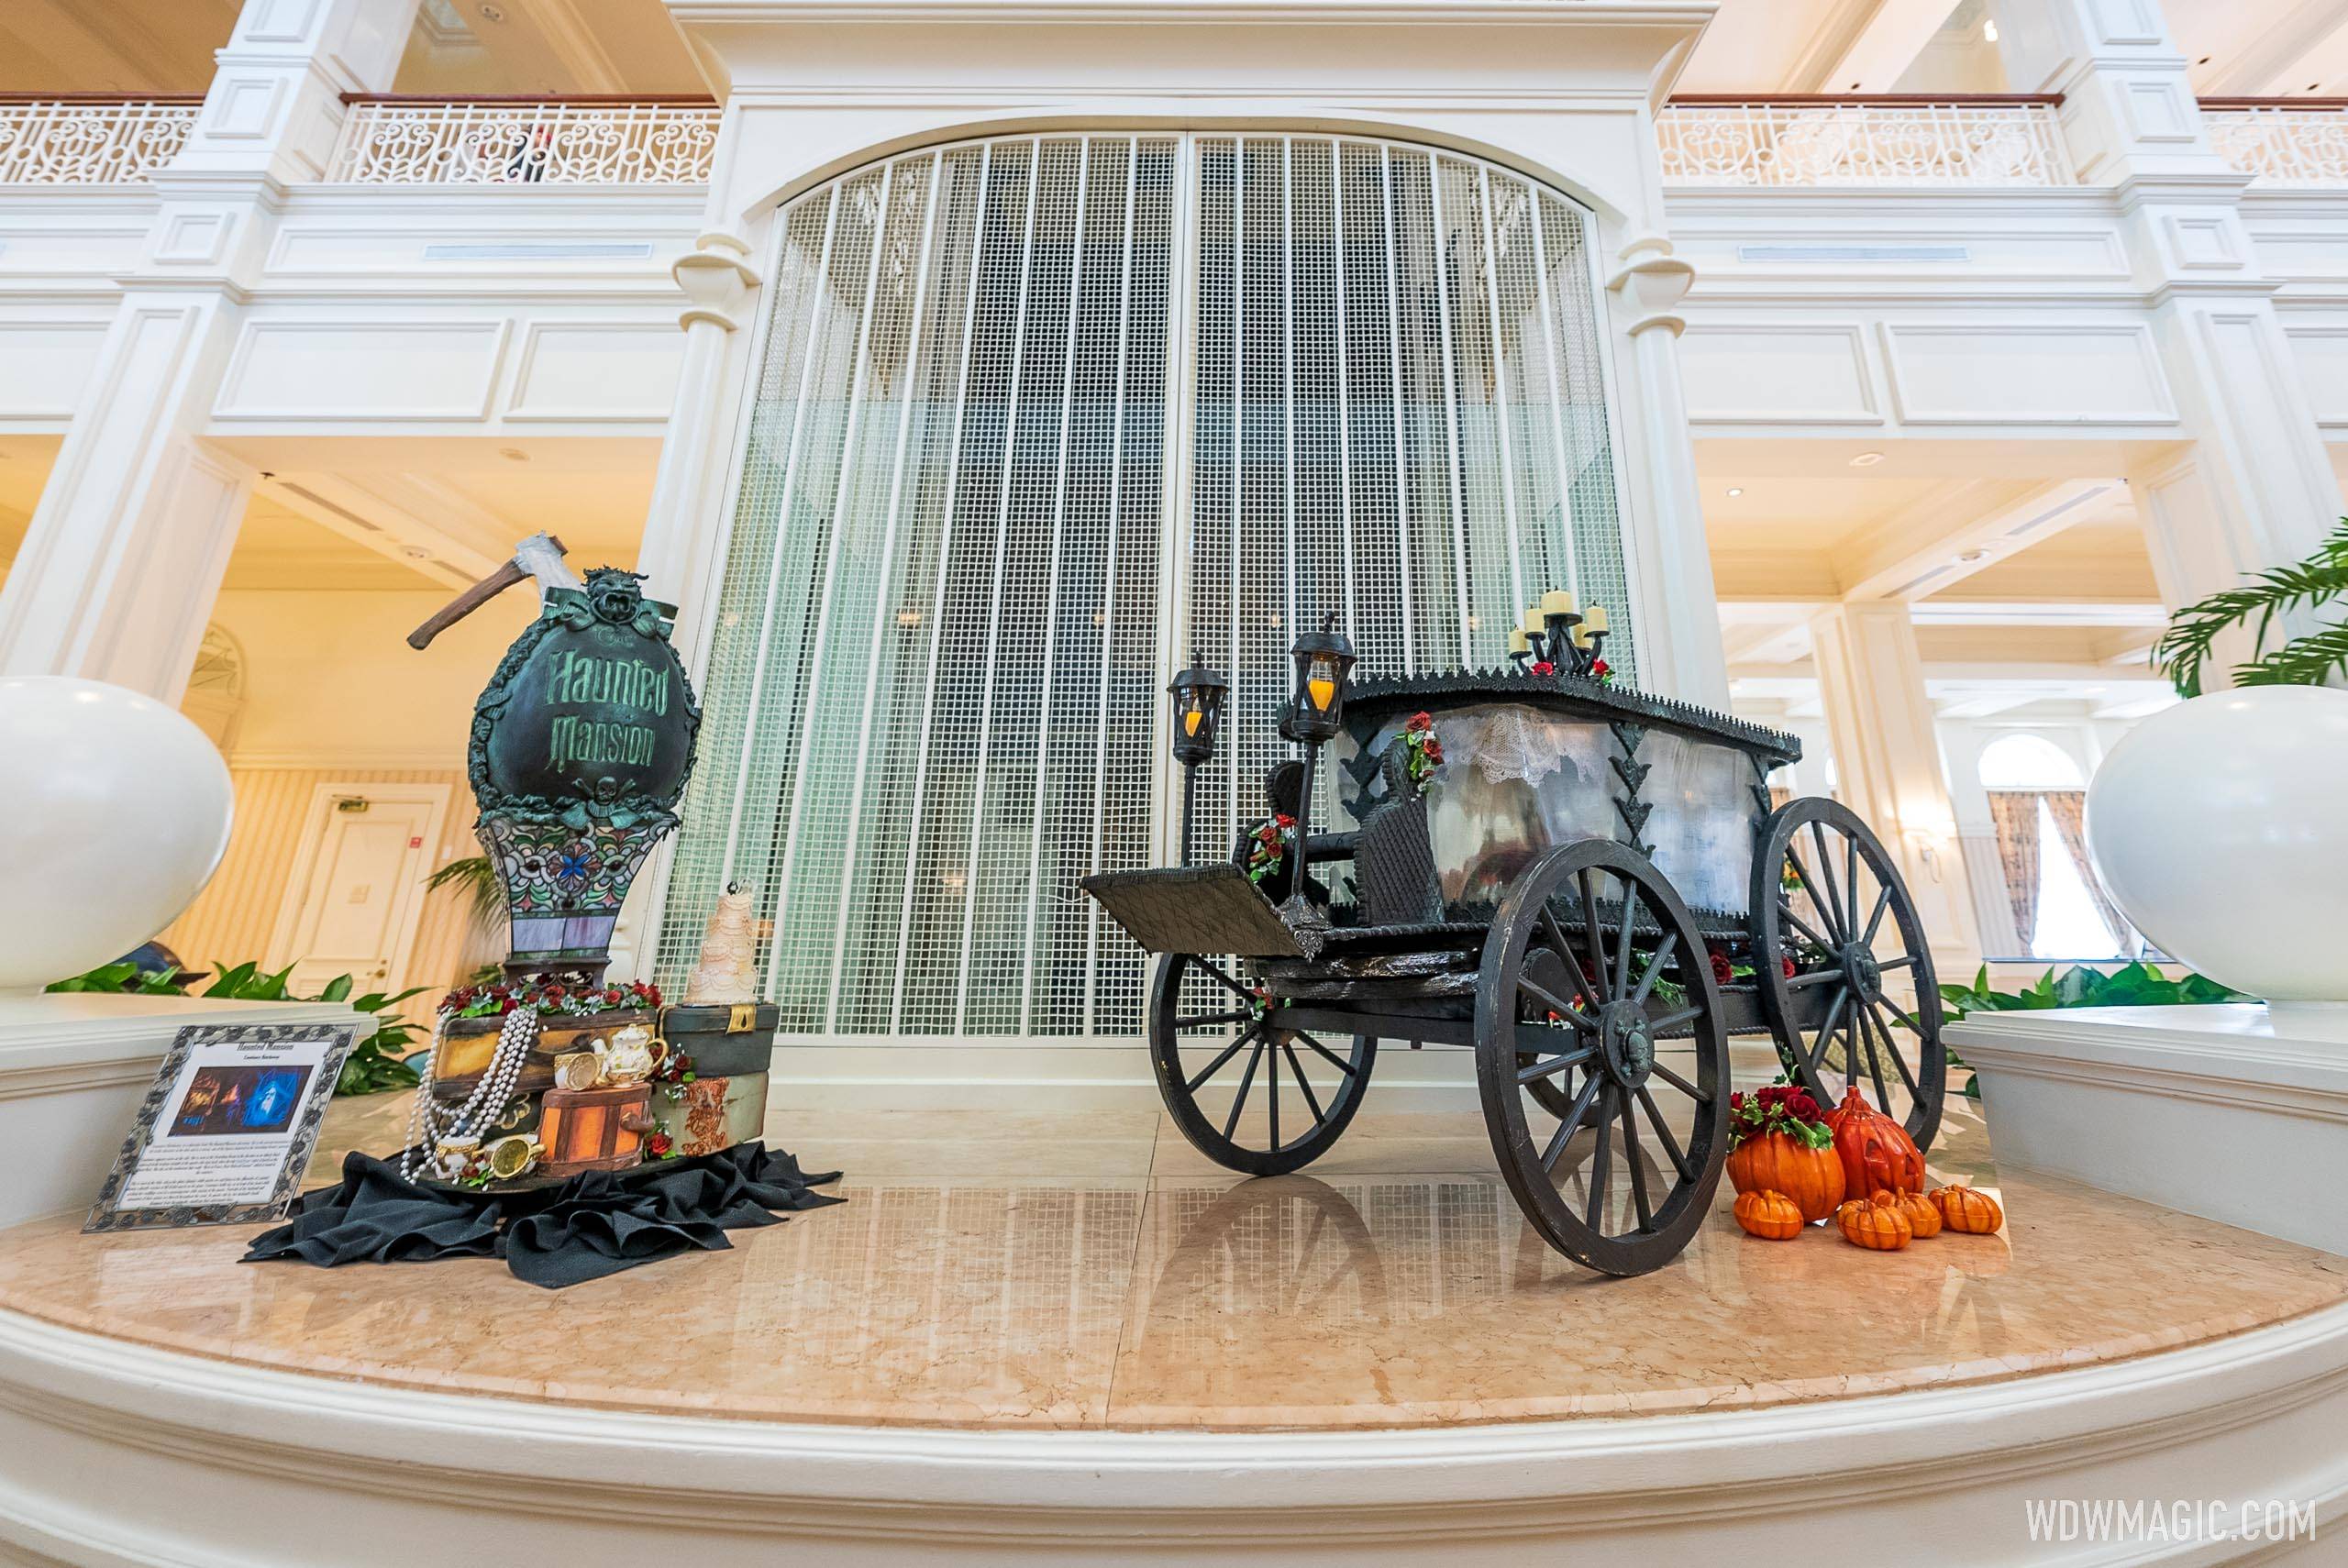 Grand Floridian Resort Haunted Mansion chocolate display